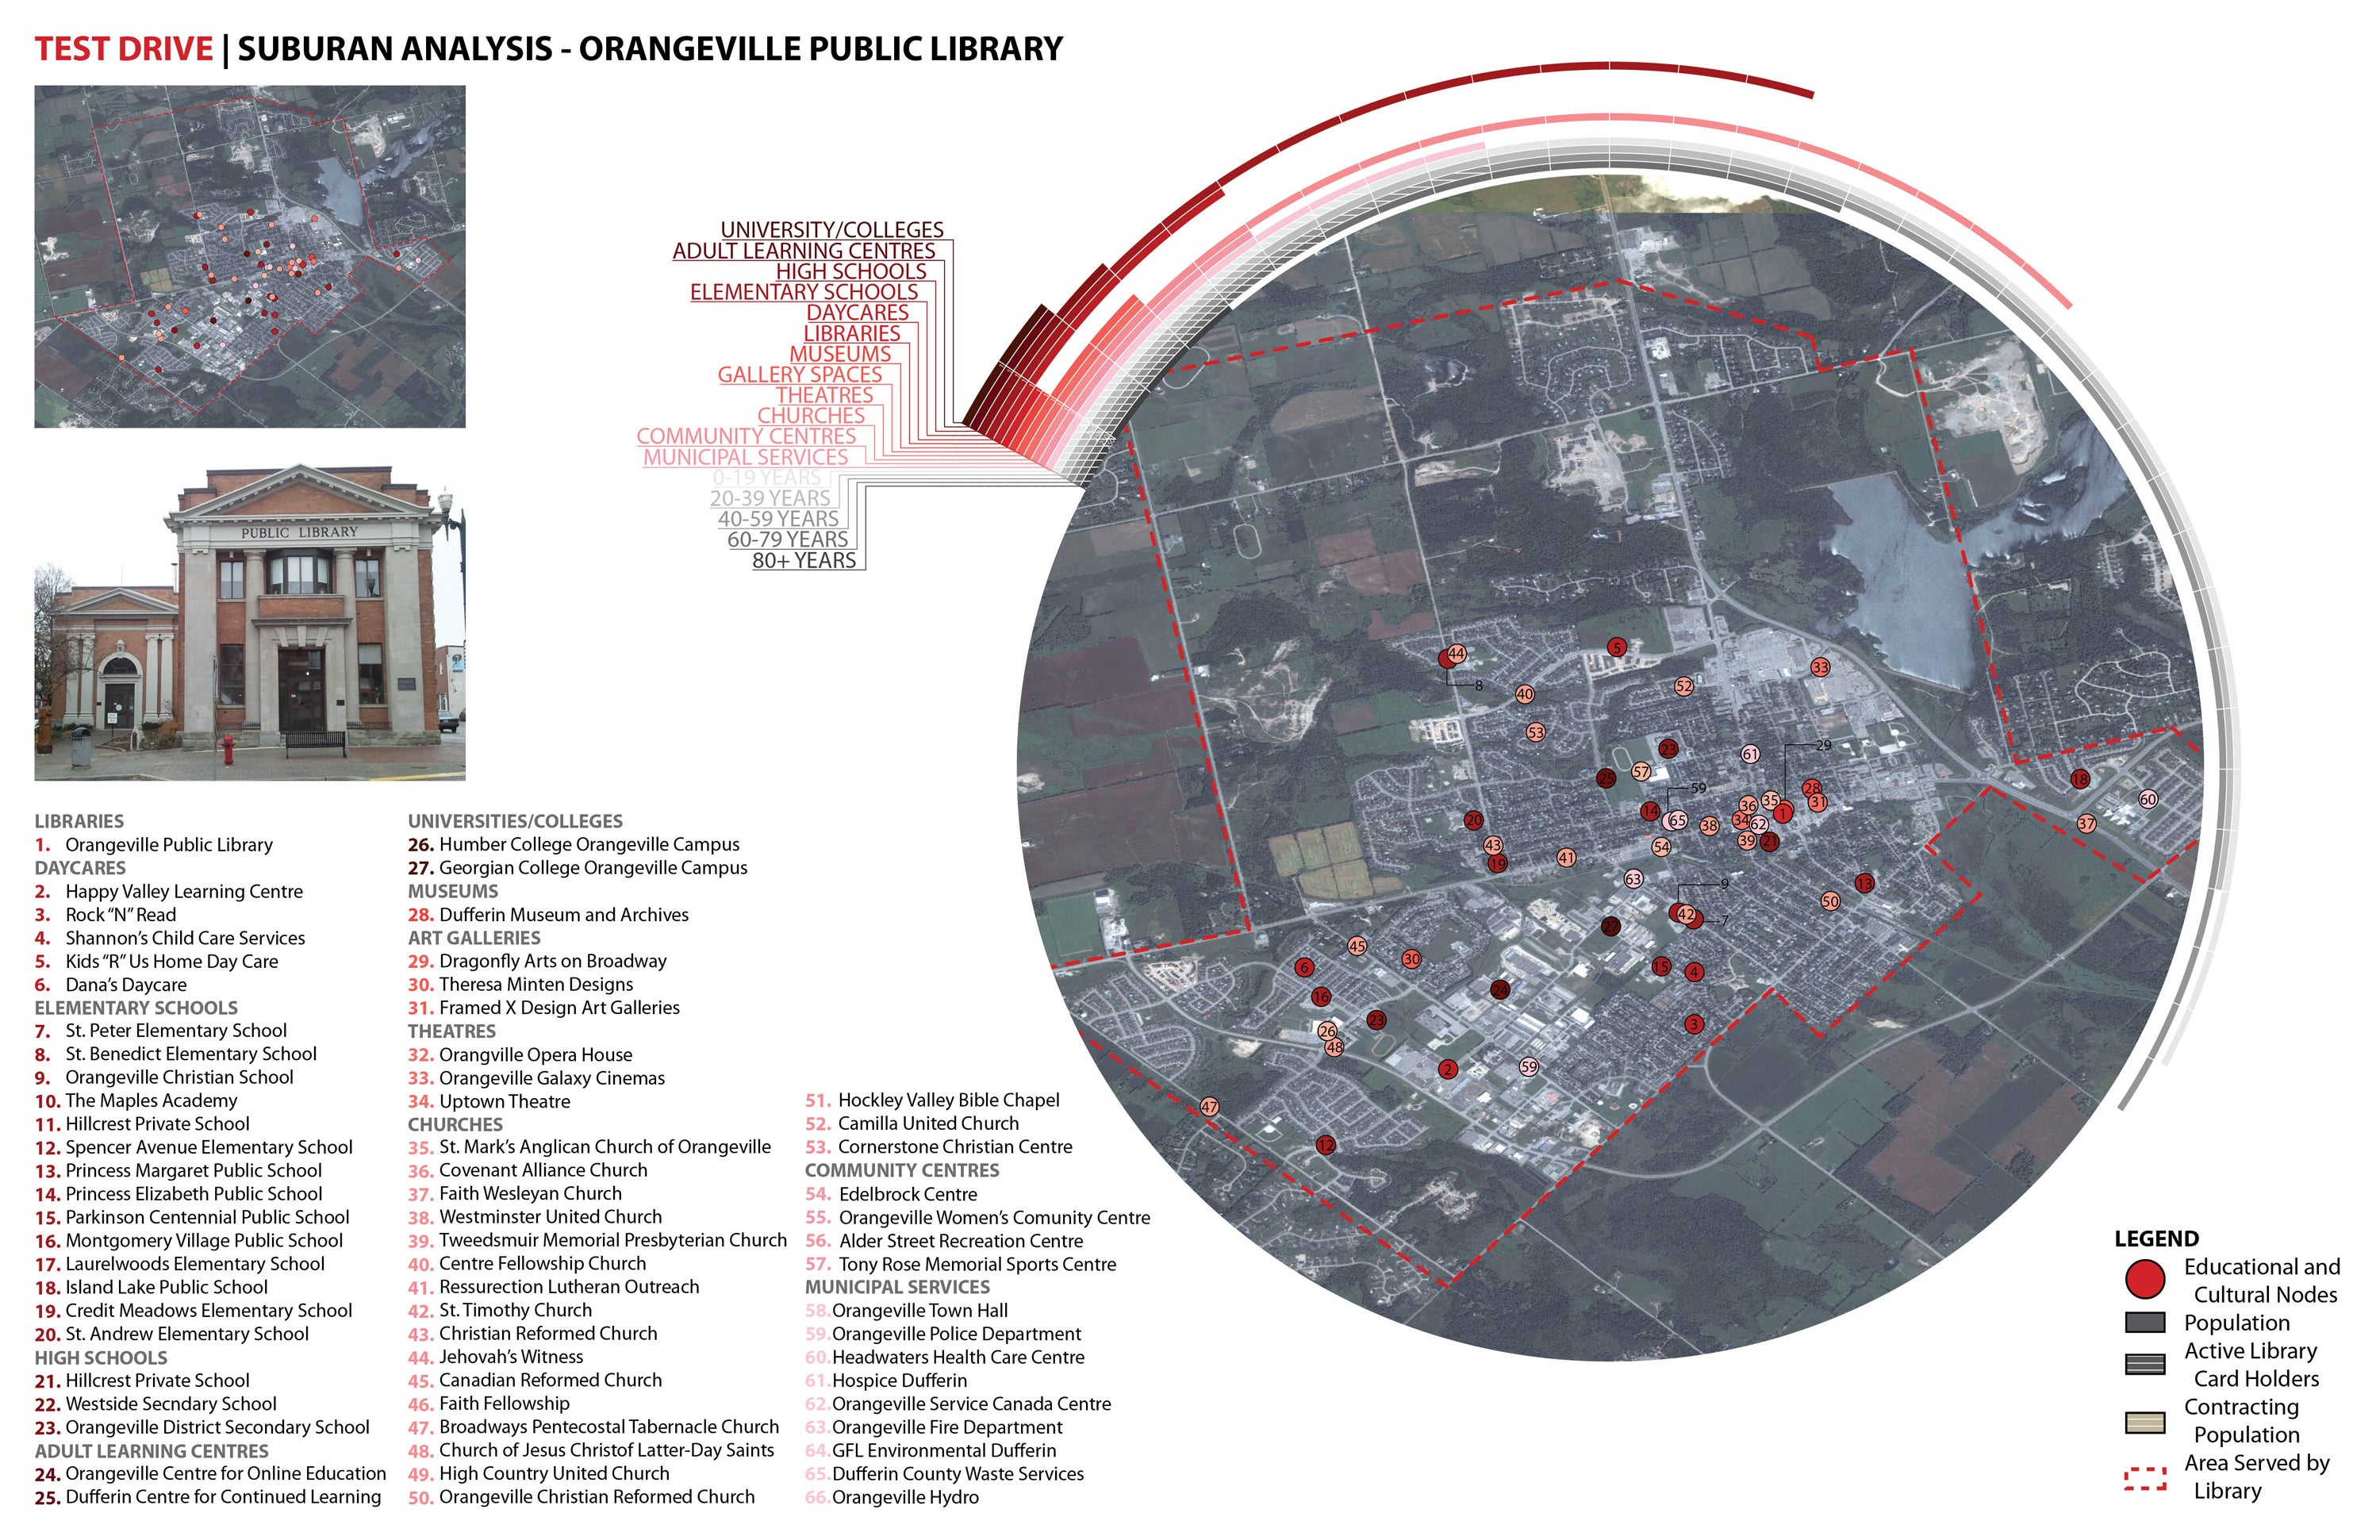 Suburban Site Analysis of the Orangeville Public Library